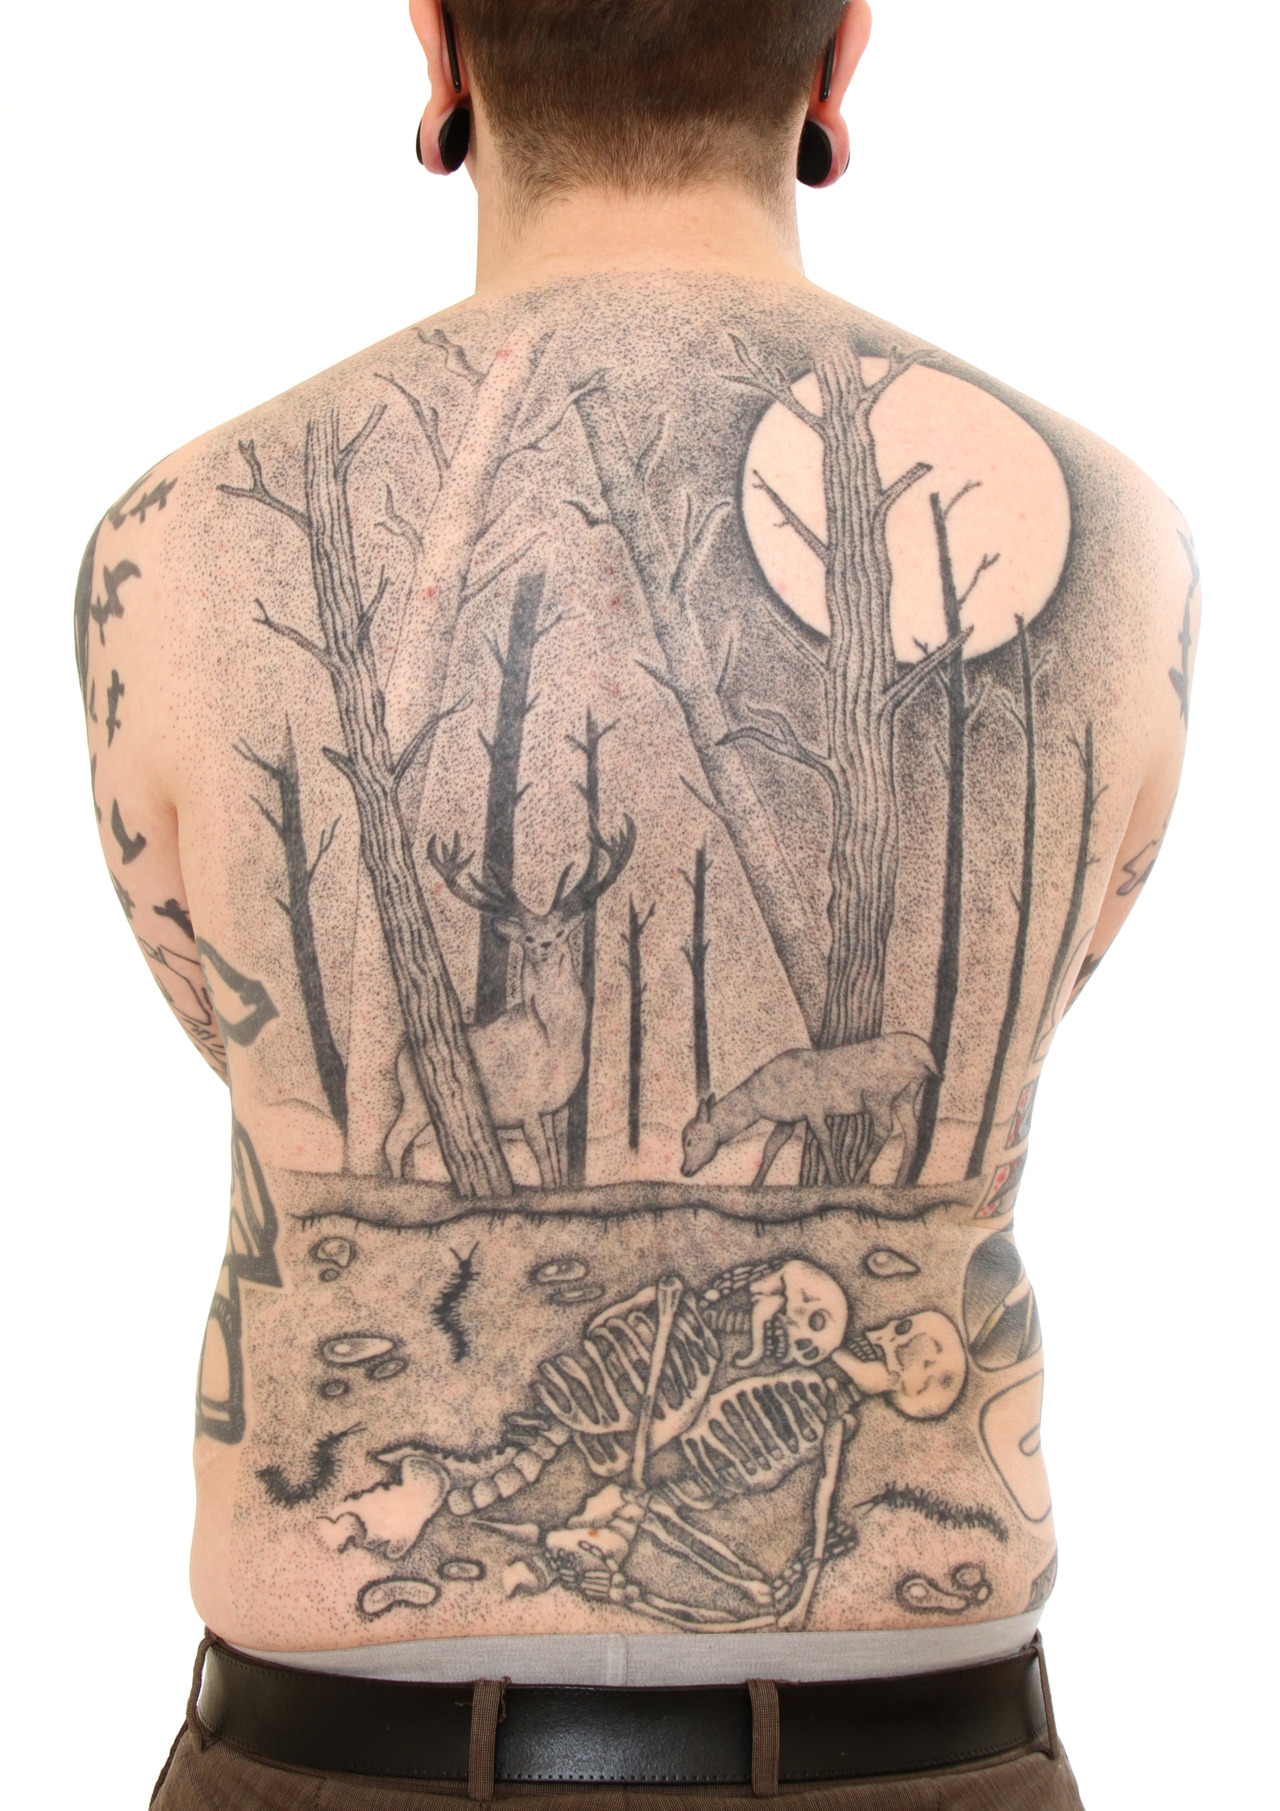 Josh Woods  Best Tattoo Ideas Gallery